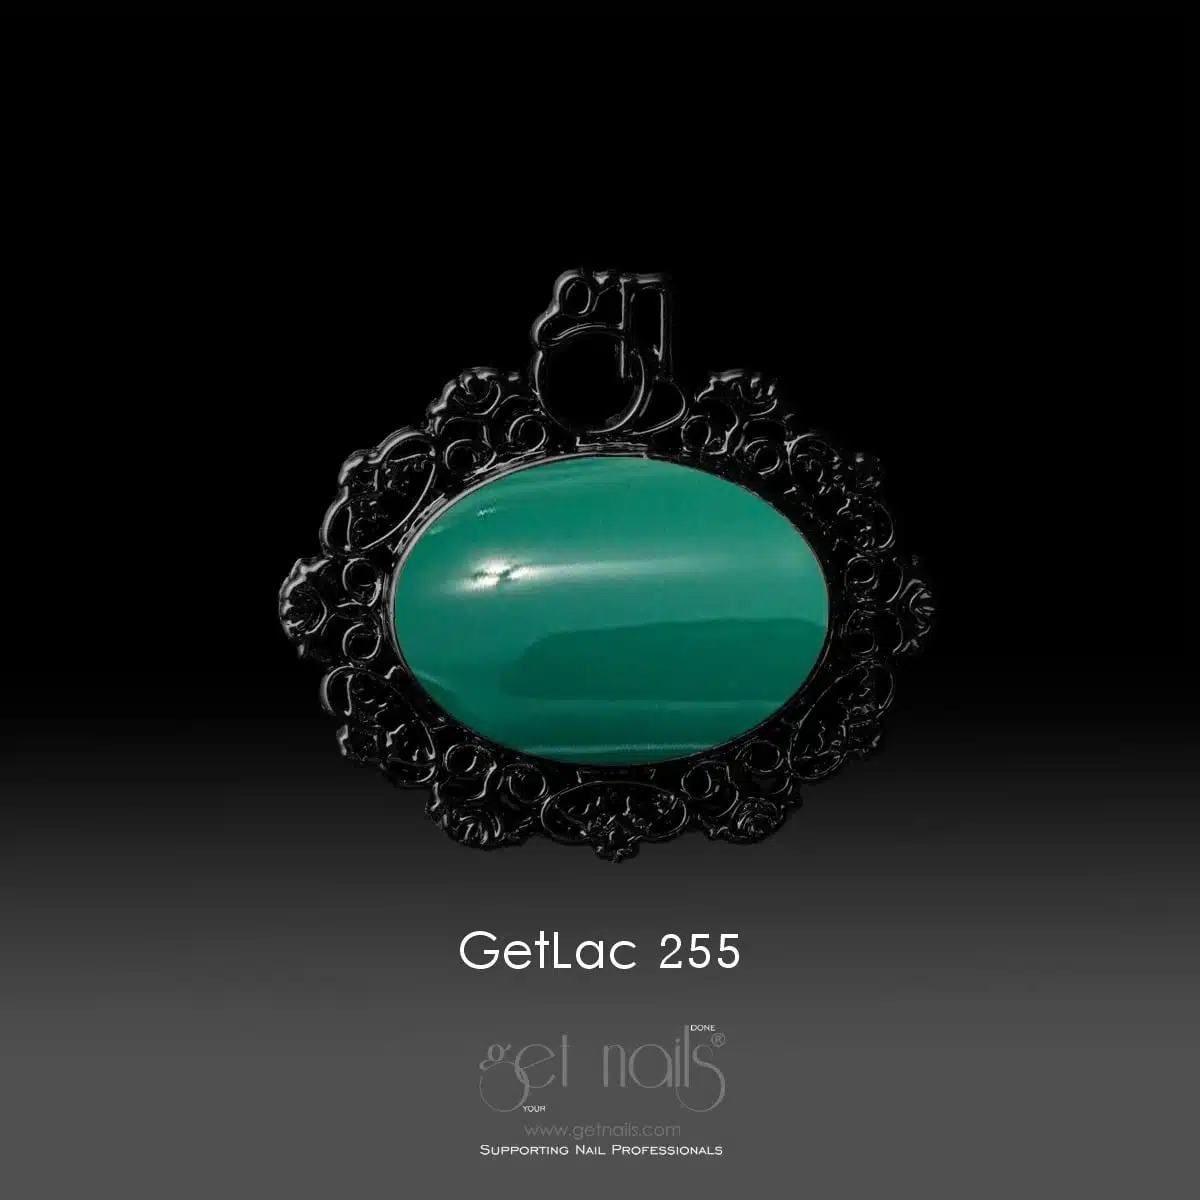 Get Nails Austria - GetLac 255 15 g